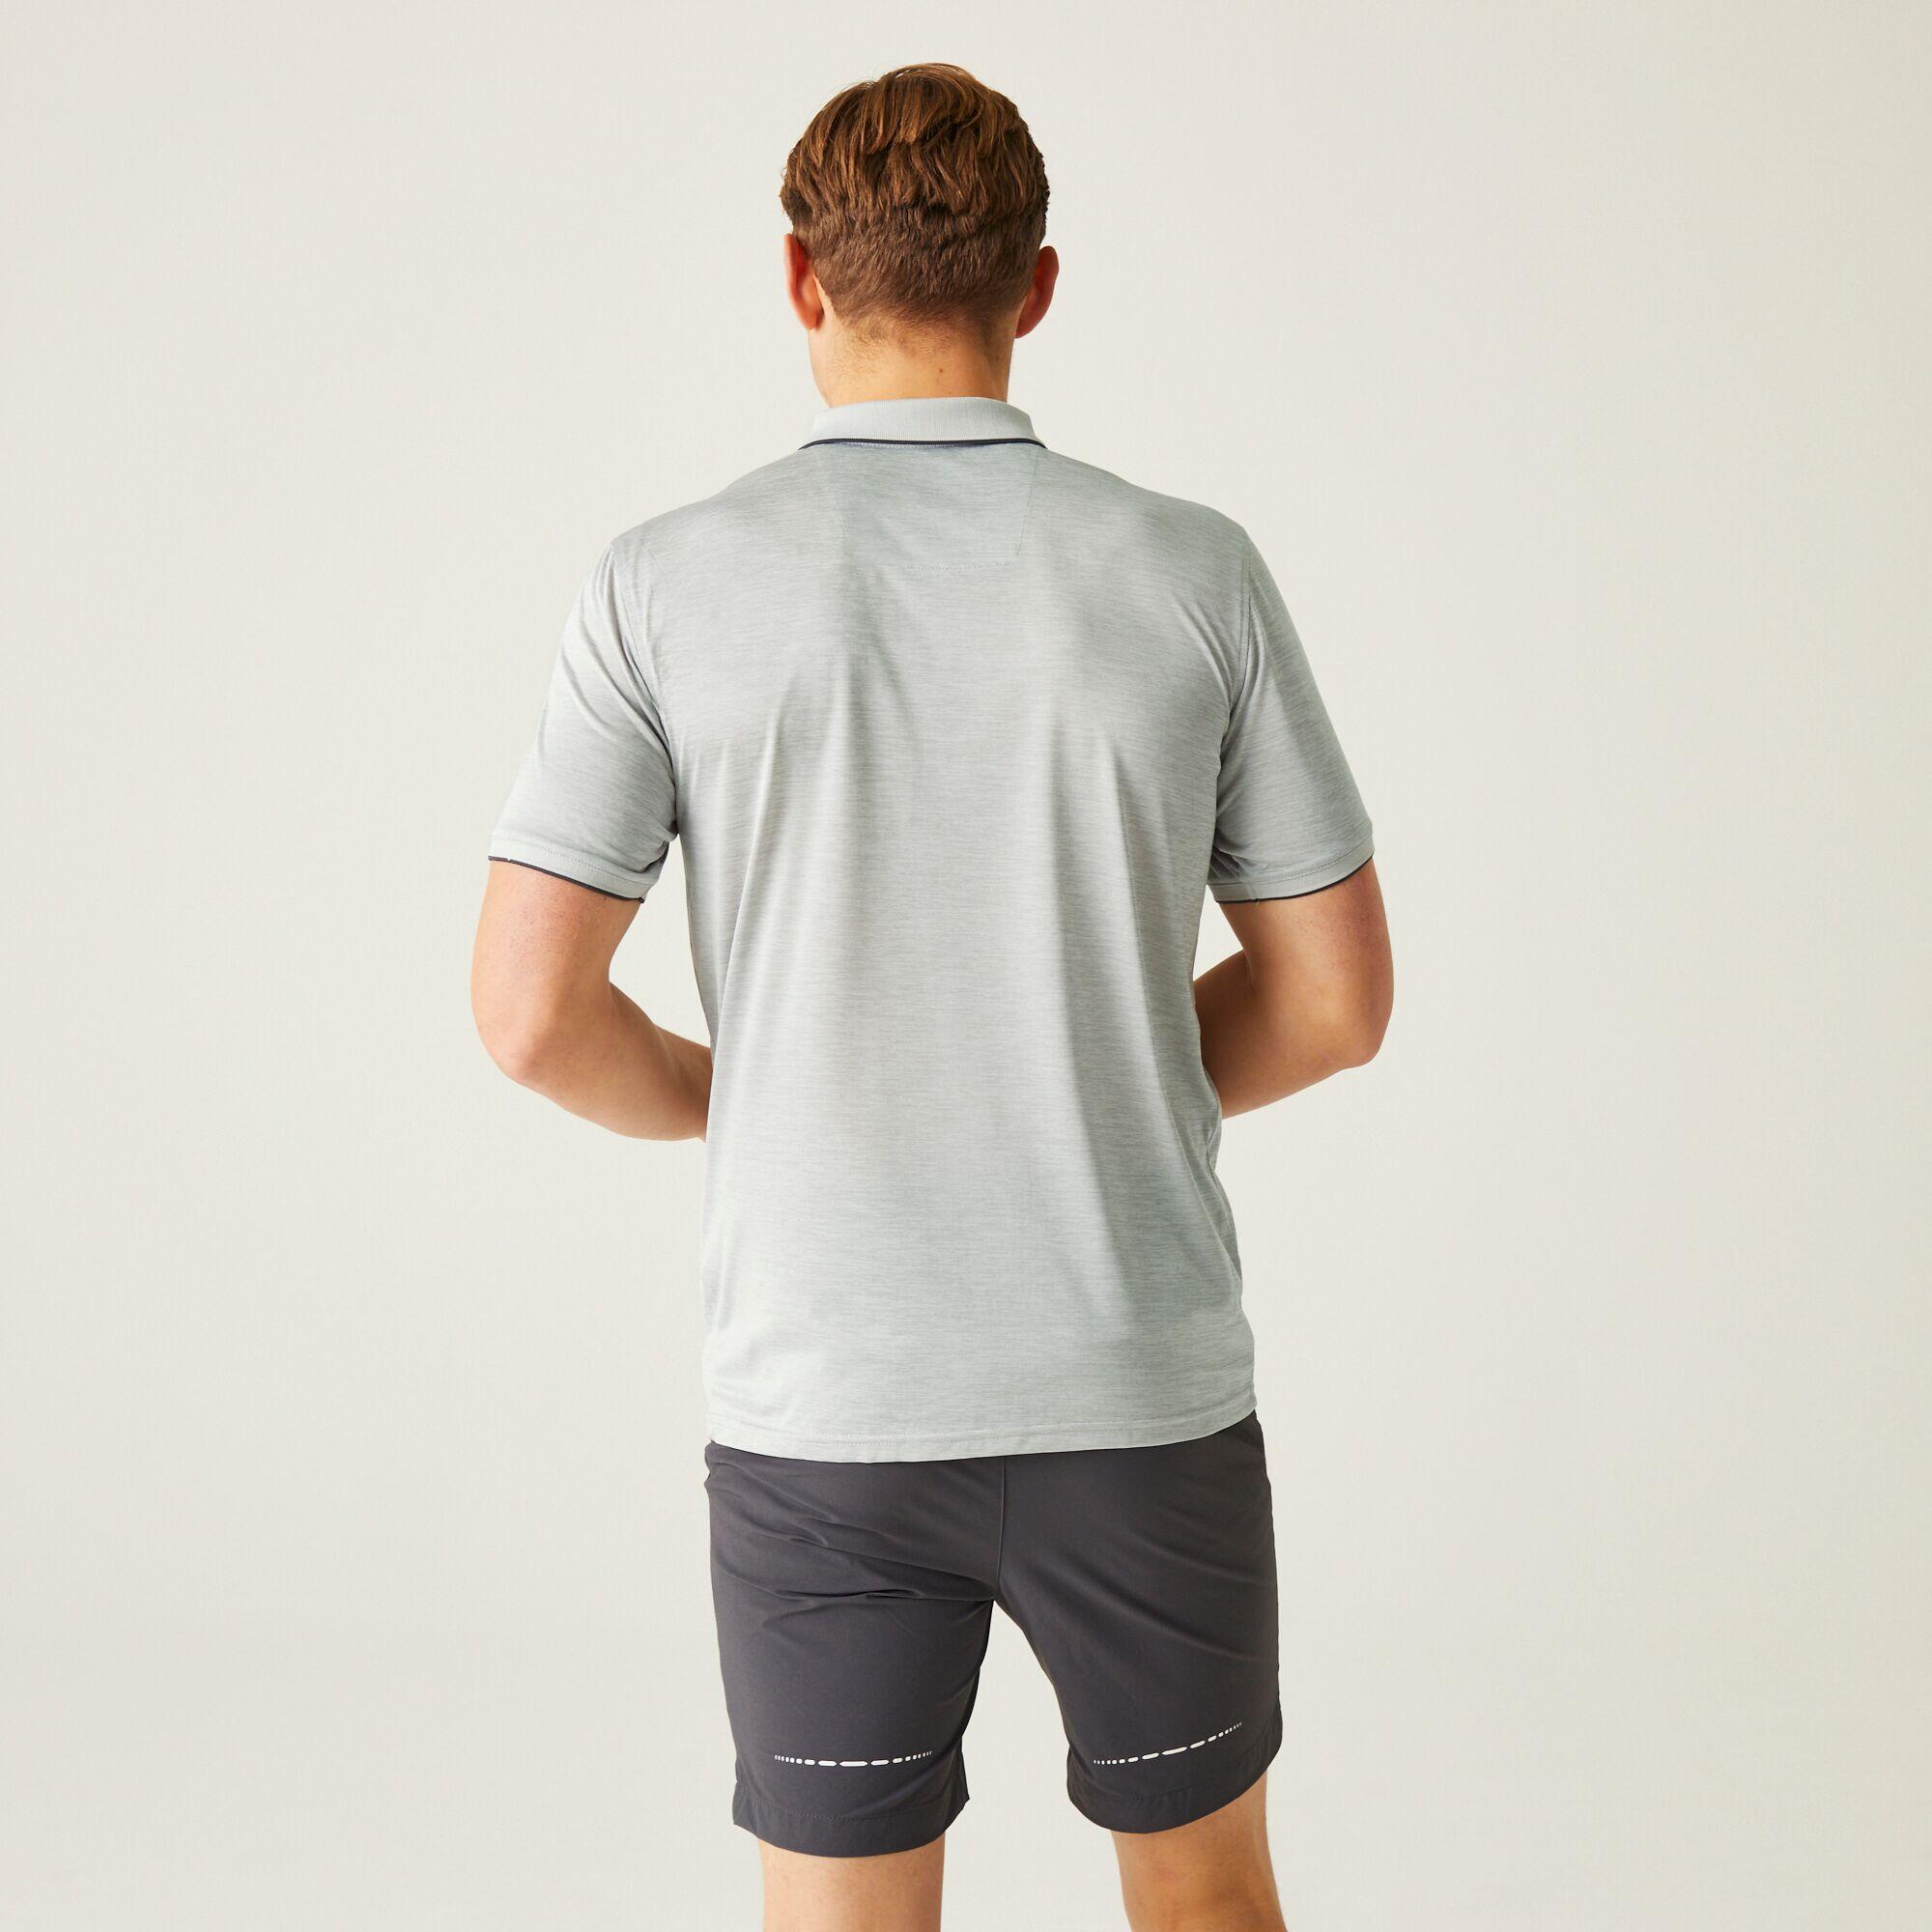 Remex II Men's Fitness T-Shirt - Pale Grey 2/6